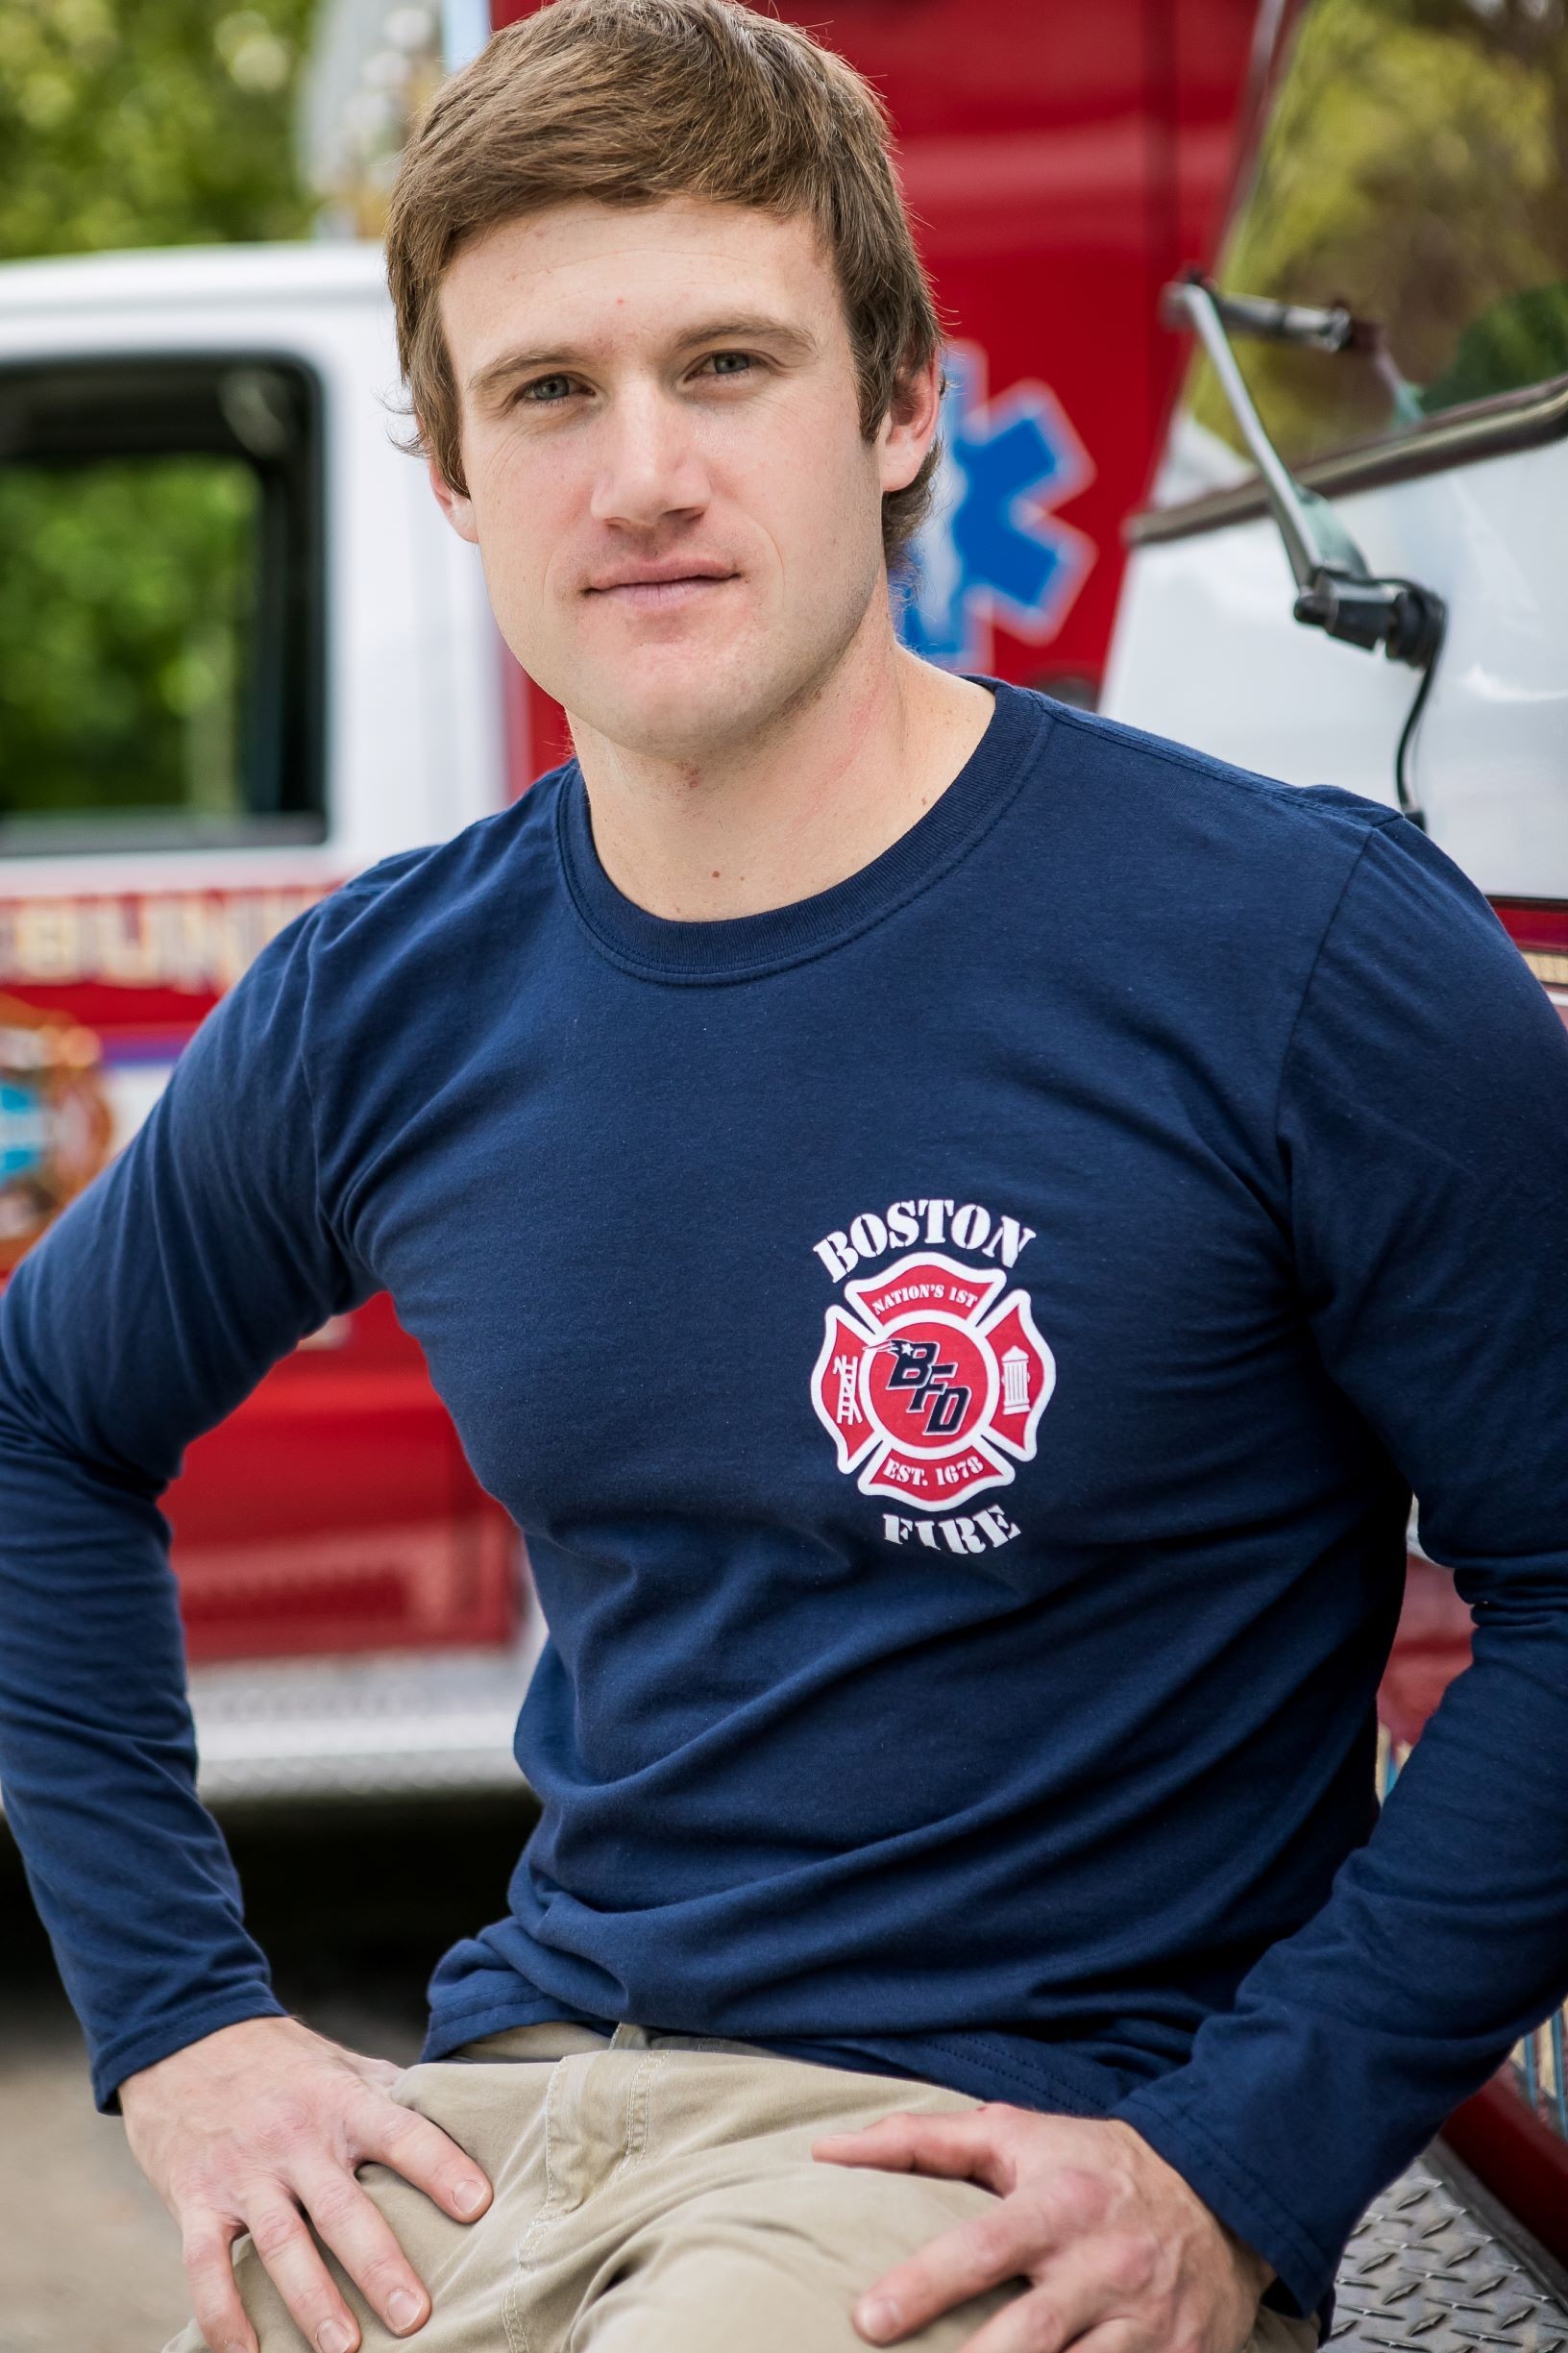 Boston Firefighters Football long sleeve t-shirt - Adult